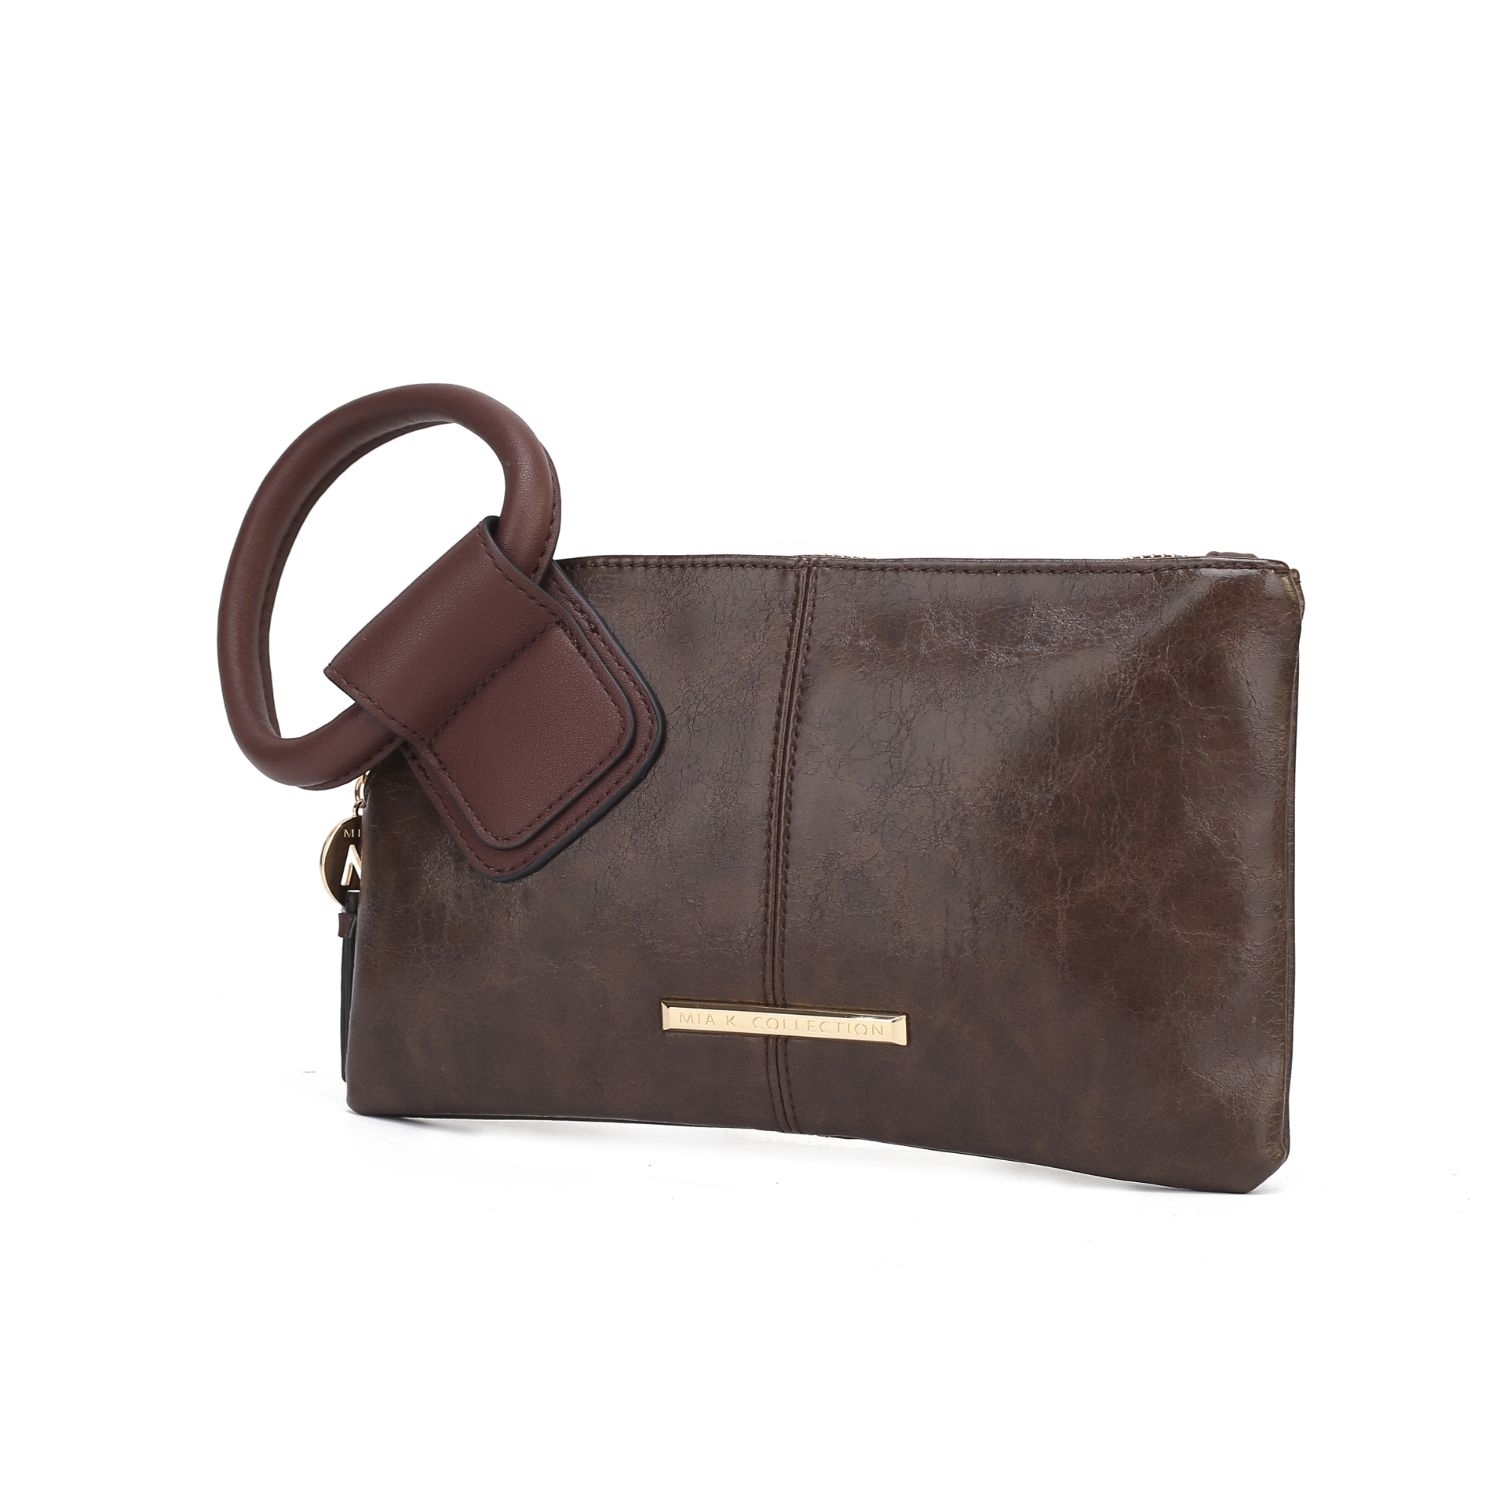 MKF Collection Simone Clutch Wristlet Handbag By Mia K. - Pink